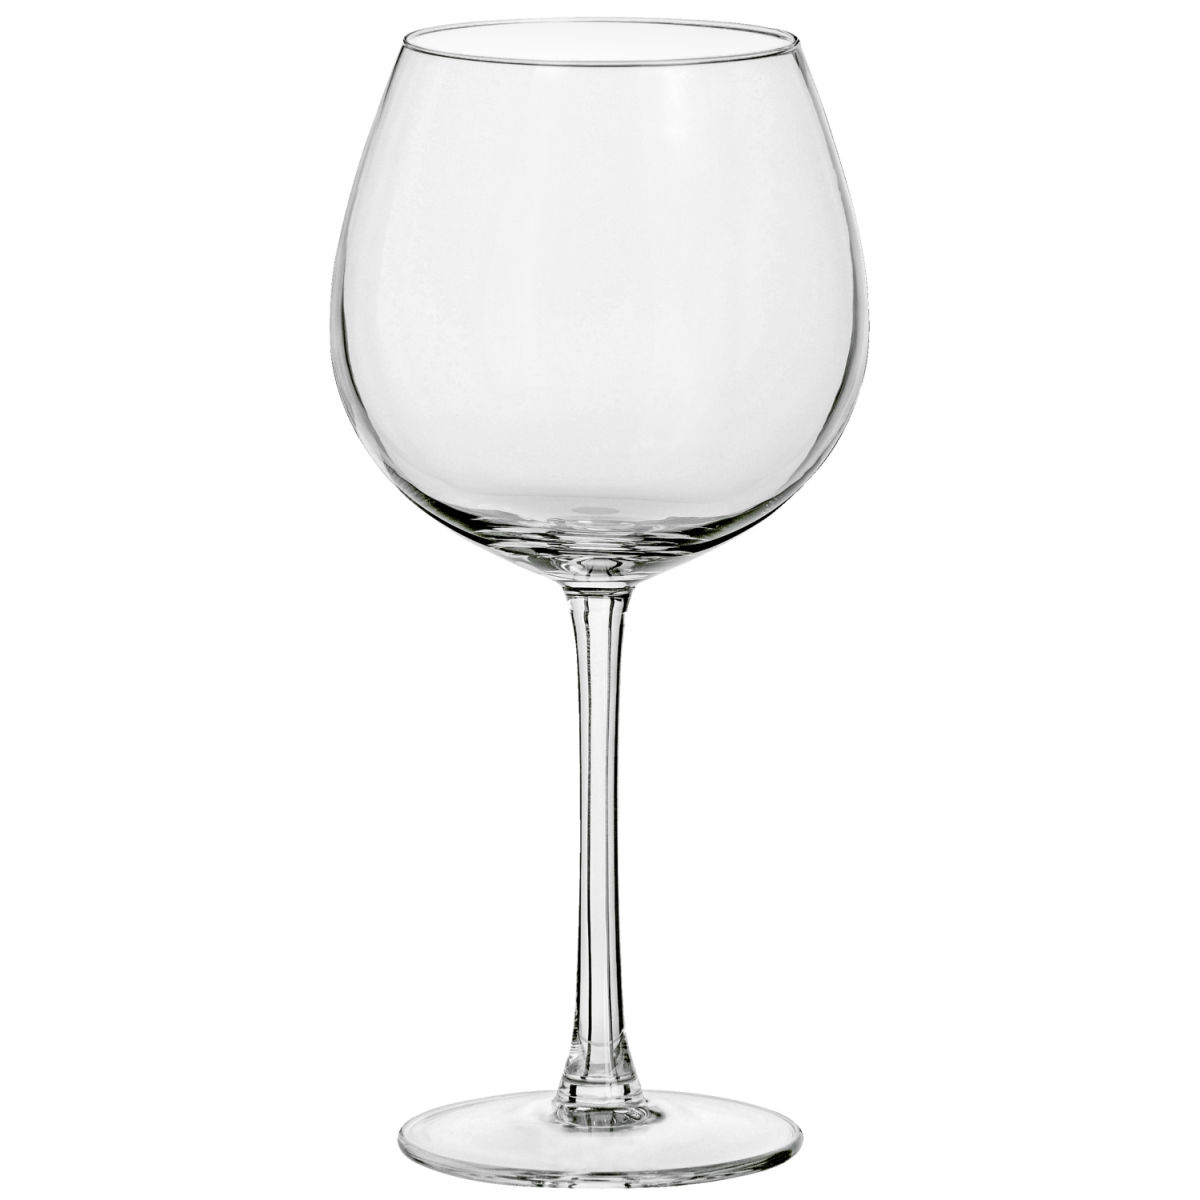 Royal leerdam Rode wijnglas Plaza Ballon; 580ml, 7.5x21.2 cm (ØxH); transparant; 6 stuk / verpakking